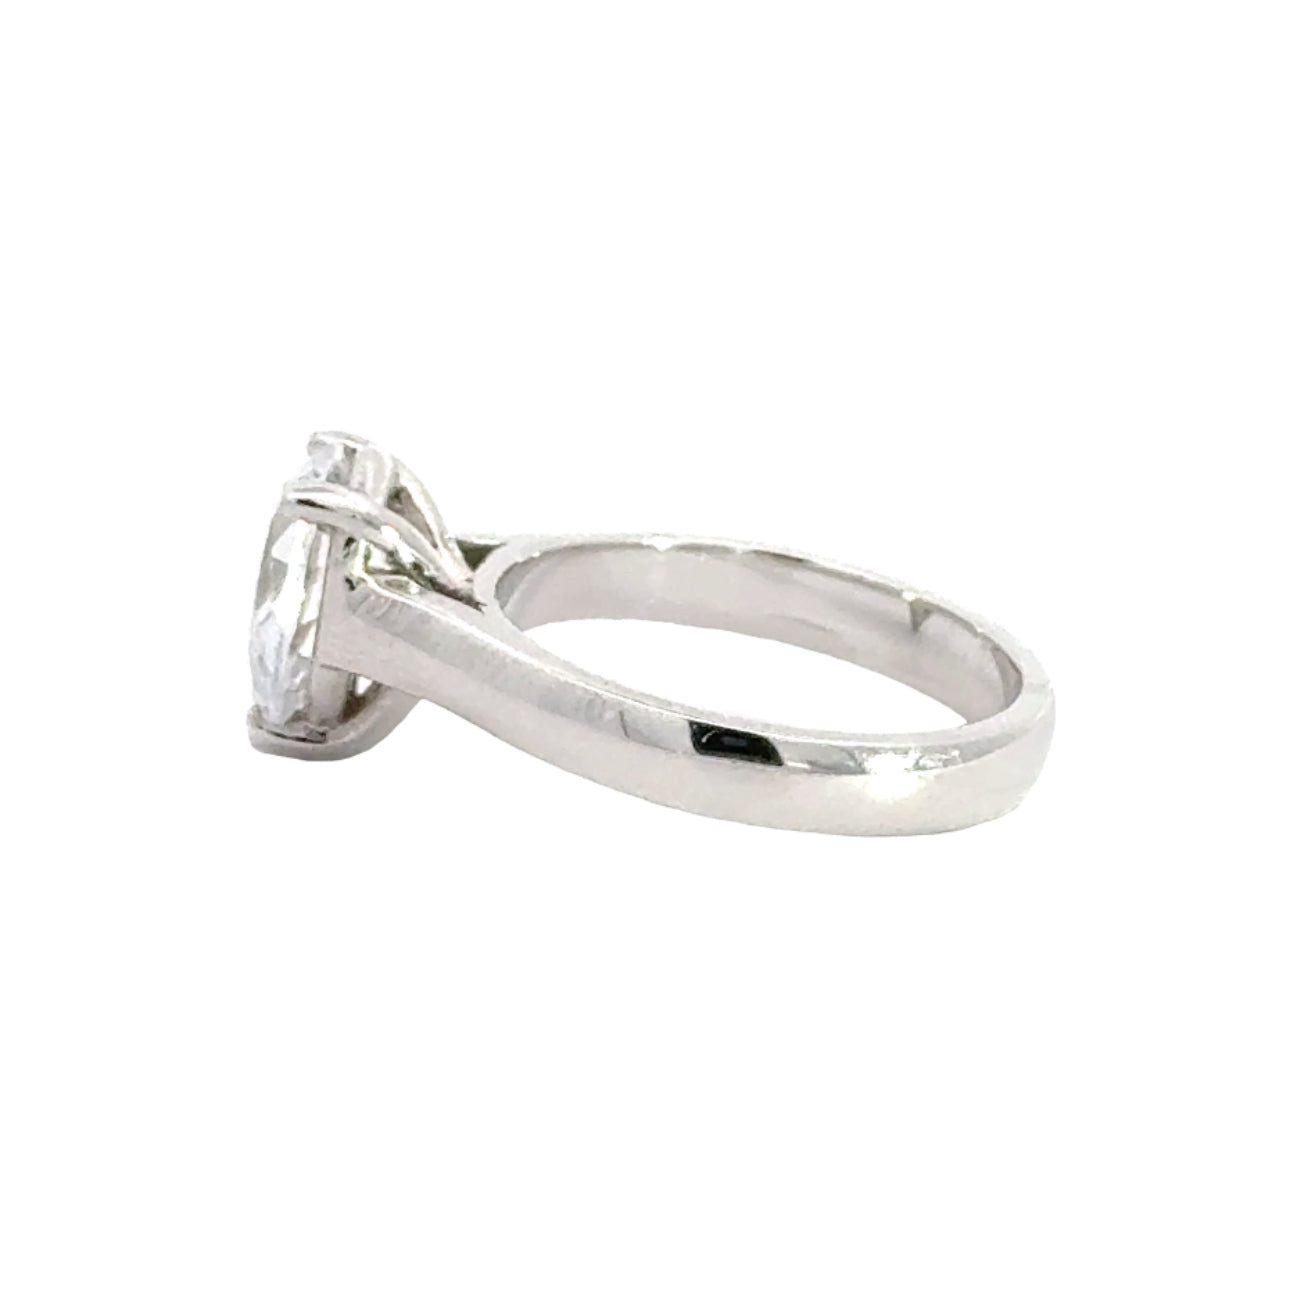 2 carat lab diamond engagement ring